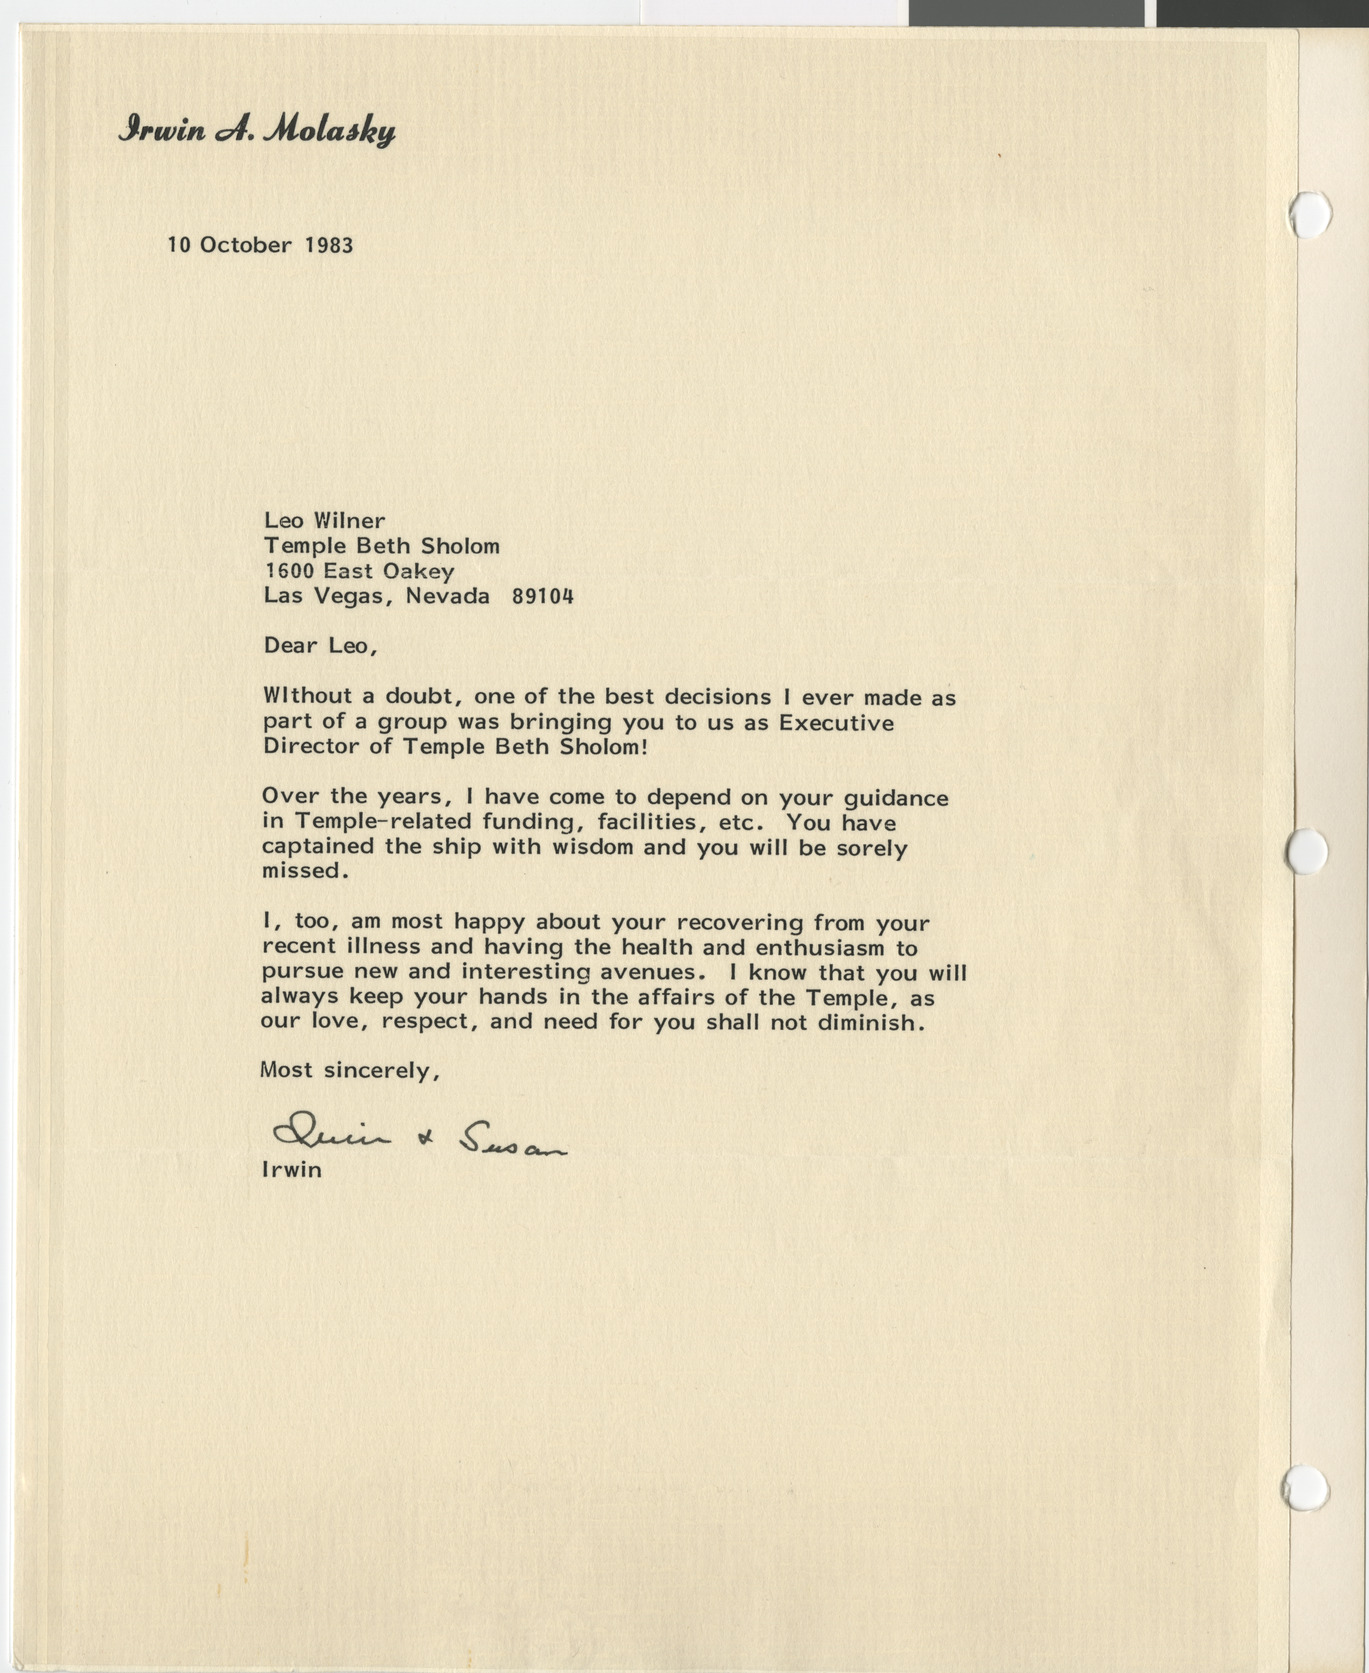 Letter from Irwin Molasky to Leo Wilner, October 10, 1983